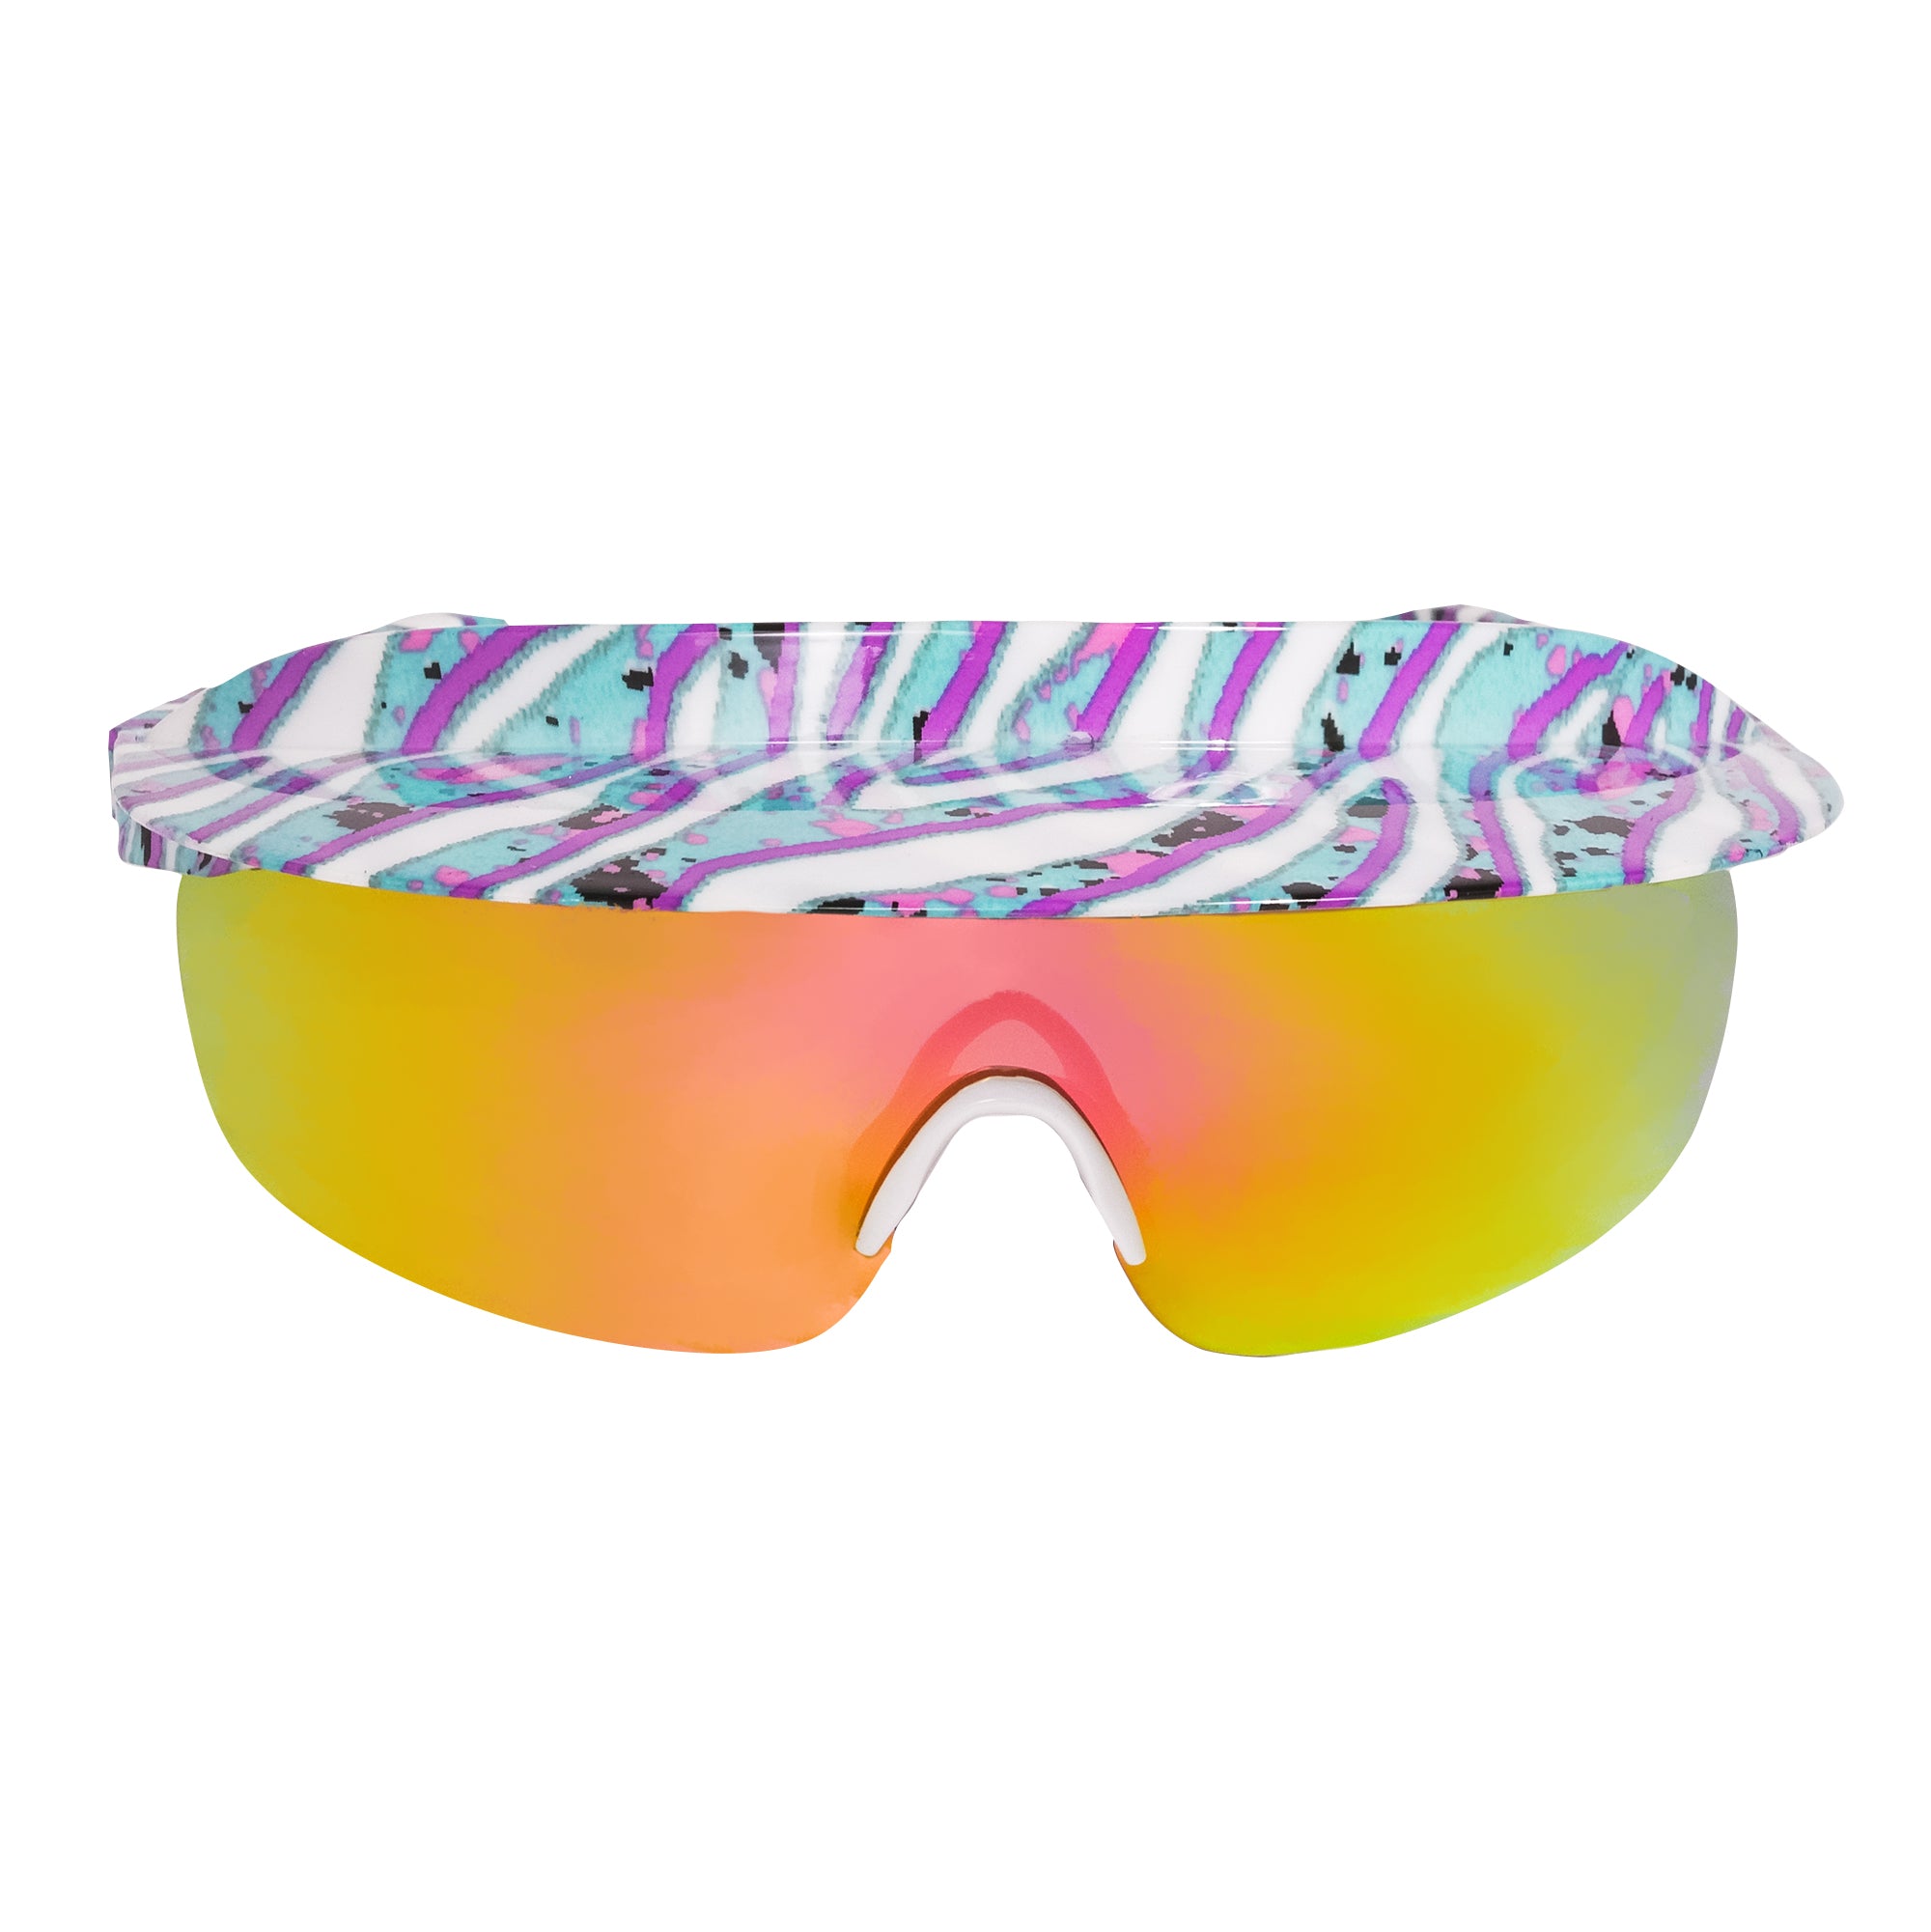 Dunkaroo 80s visor retro visor shade ski sunglasses. Pink blue white vintage retro 90s inspired ski visor sunglasses. Polarized UV400 shades retro. B Fresh Gear